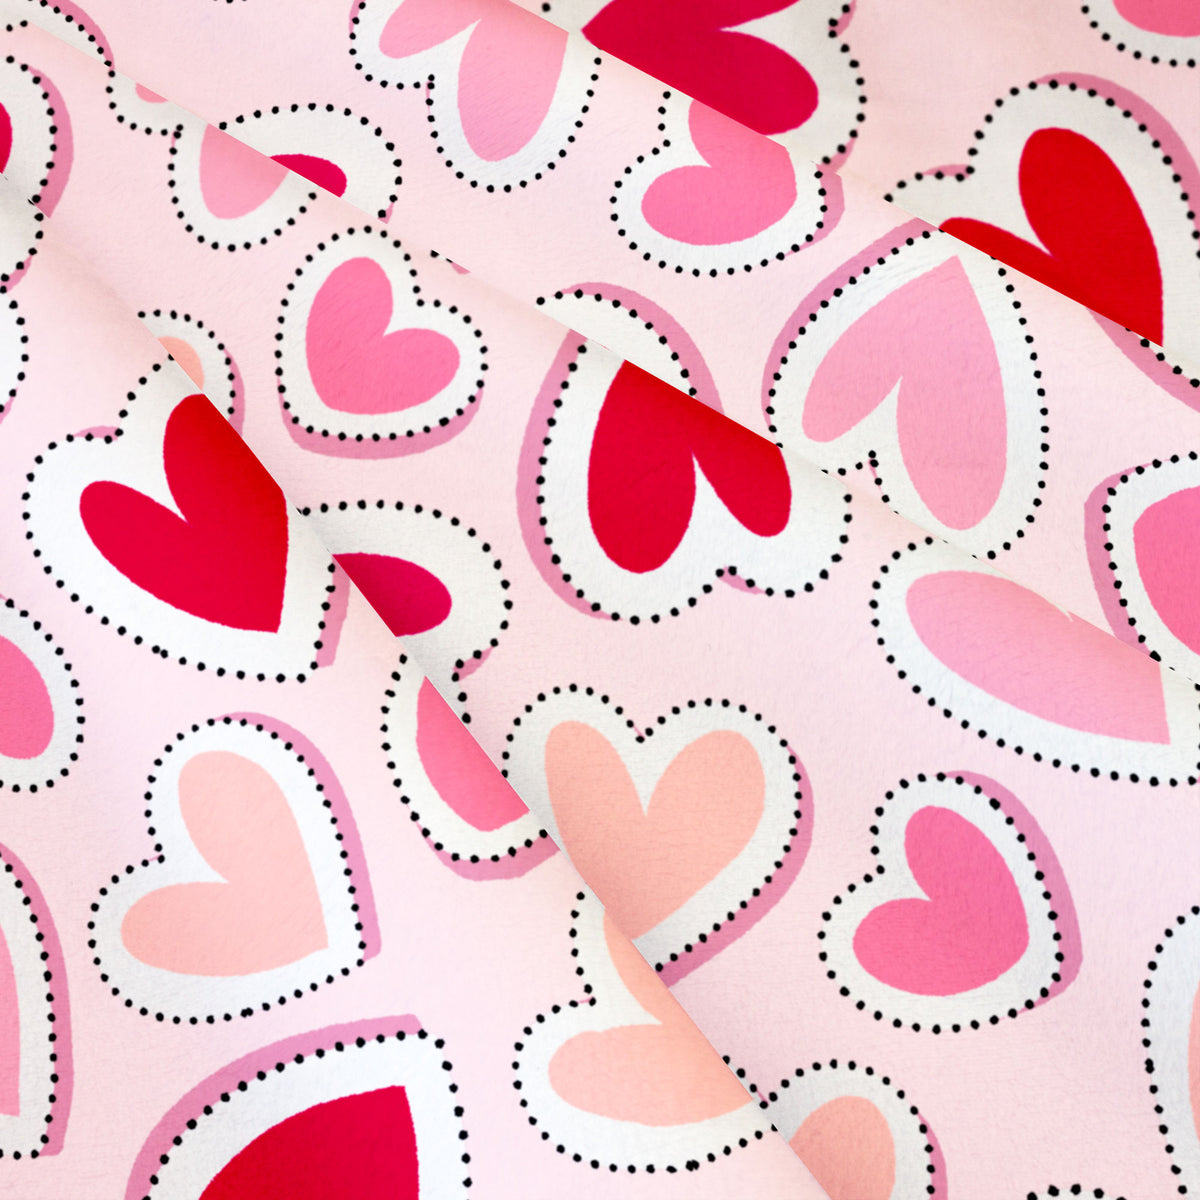 Cutout Hearts | Purrfect Valentine